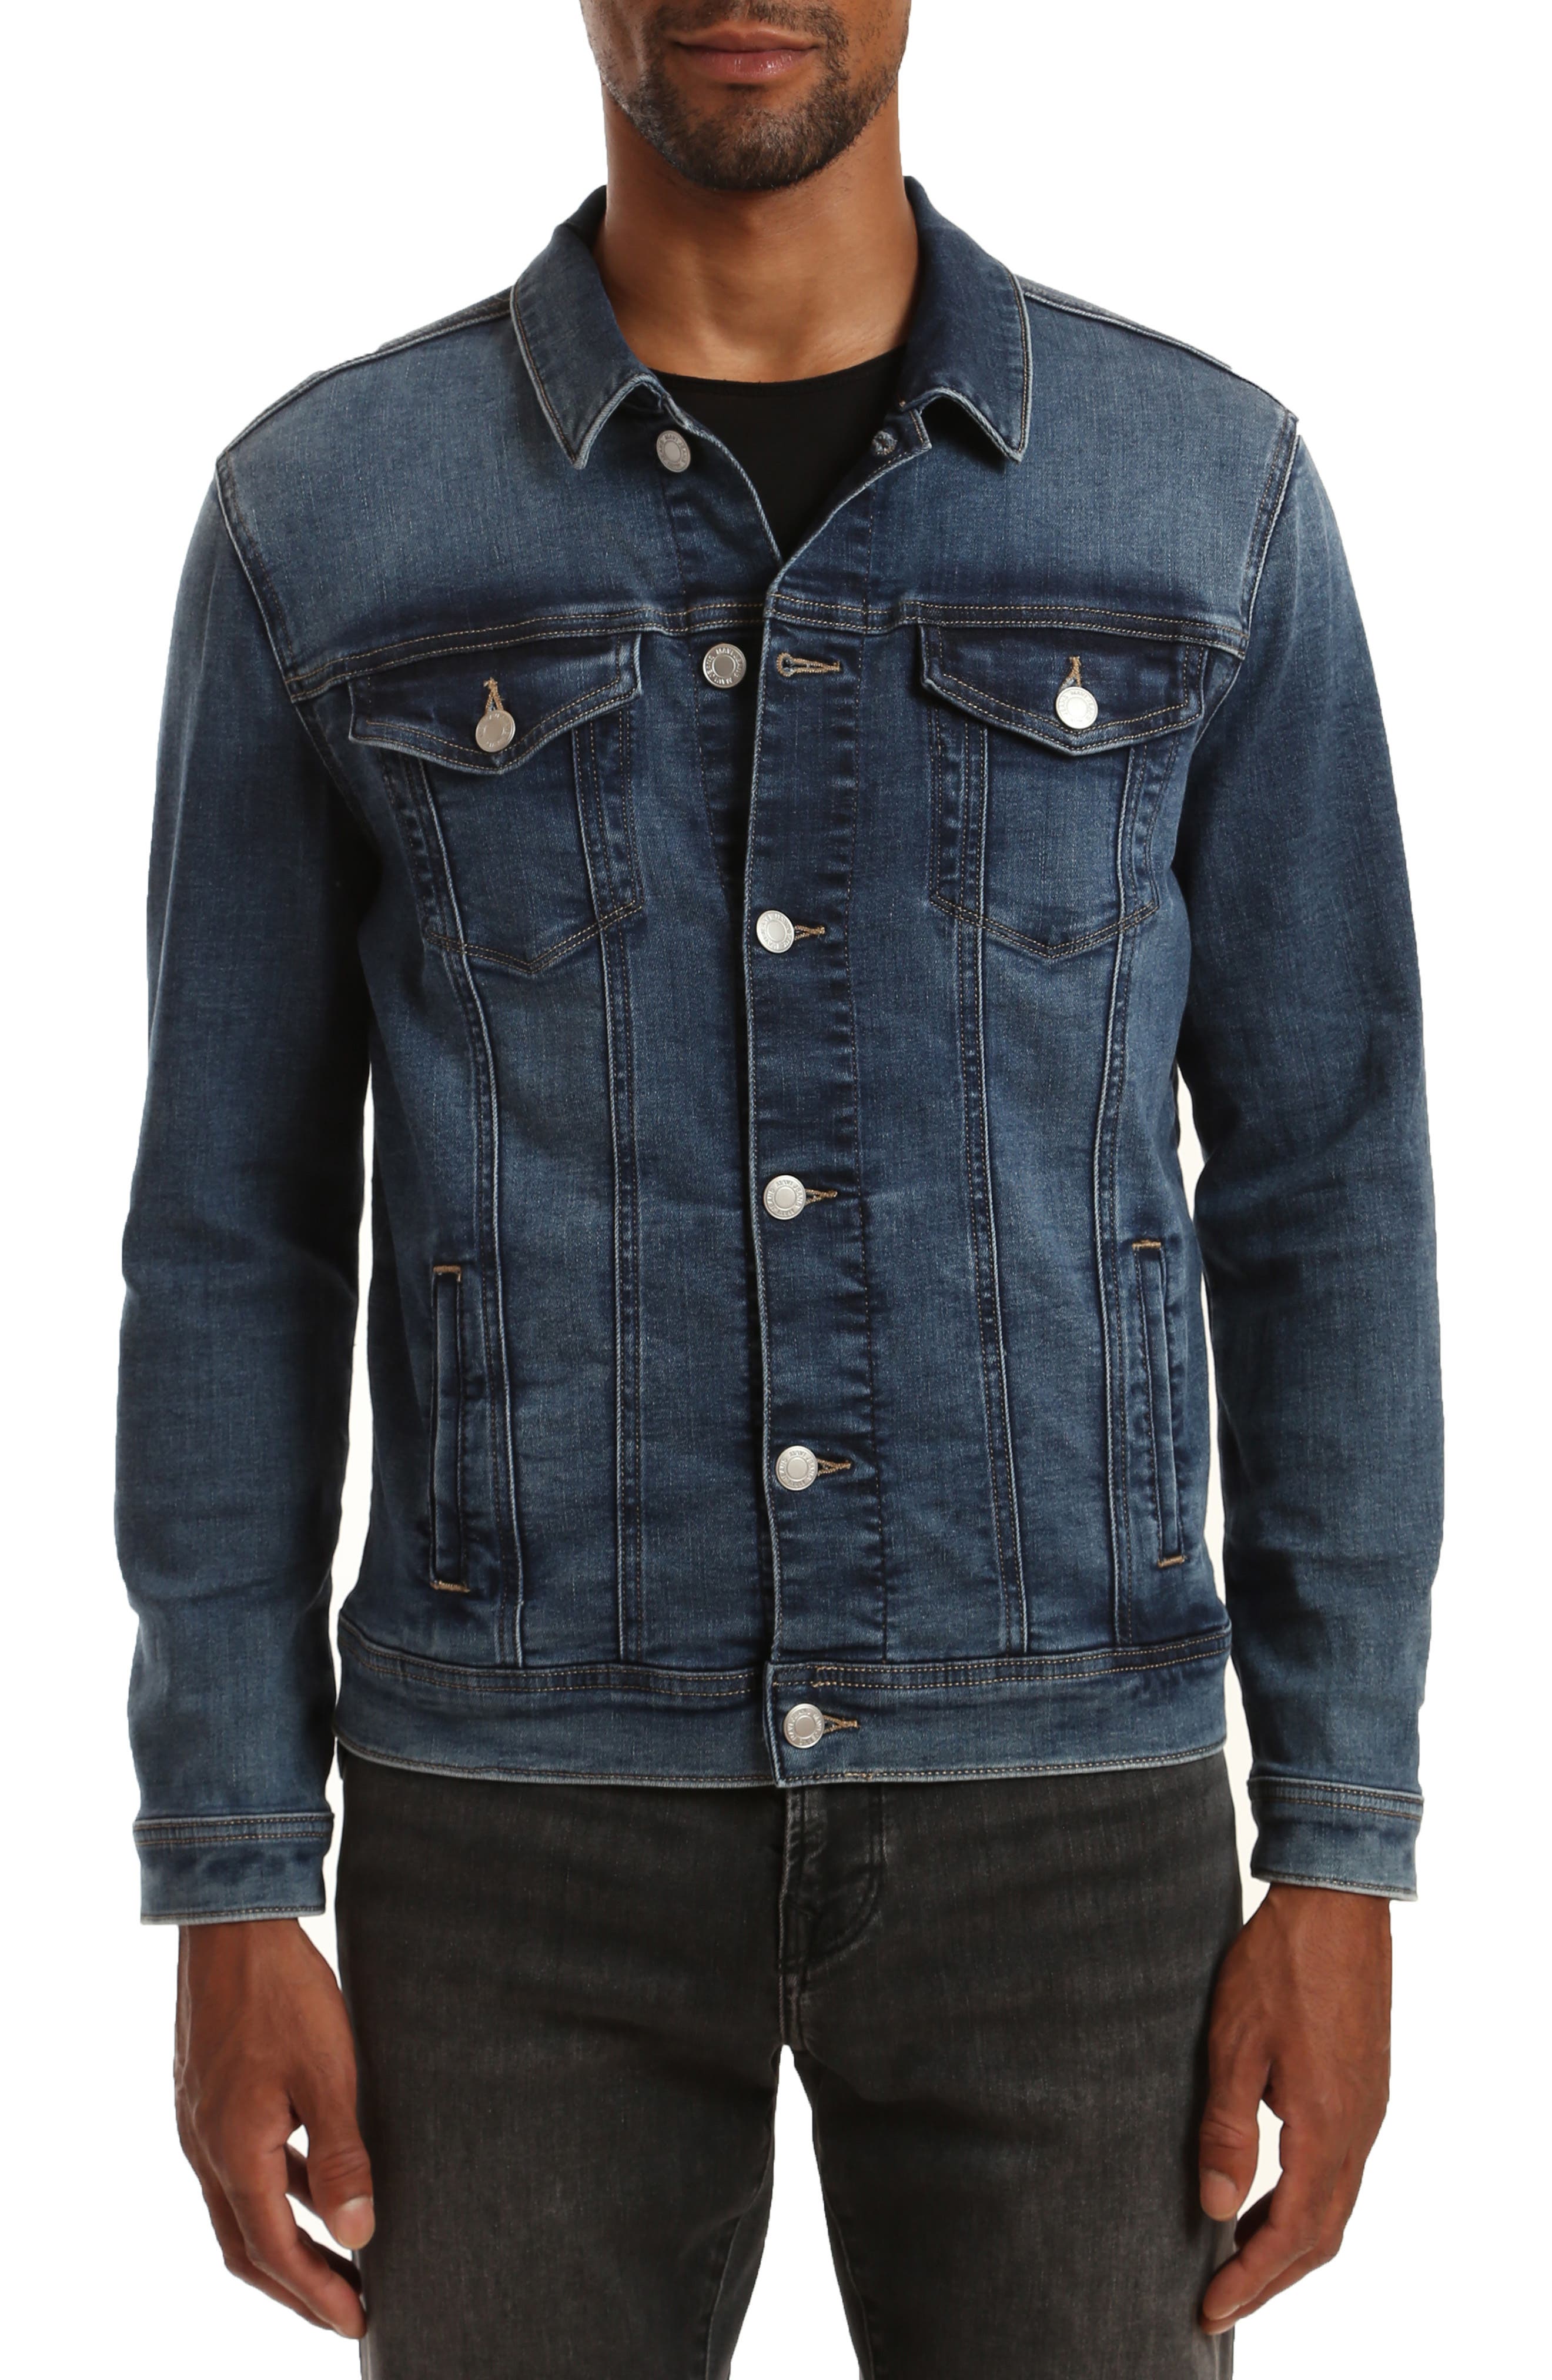 WUAI-Men Denim Hoodie Jacket Casual Slim Fit Button Down Military Jeans Trucker Jean Coat 